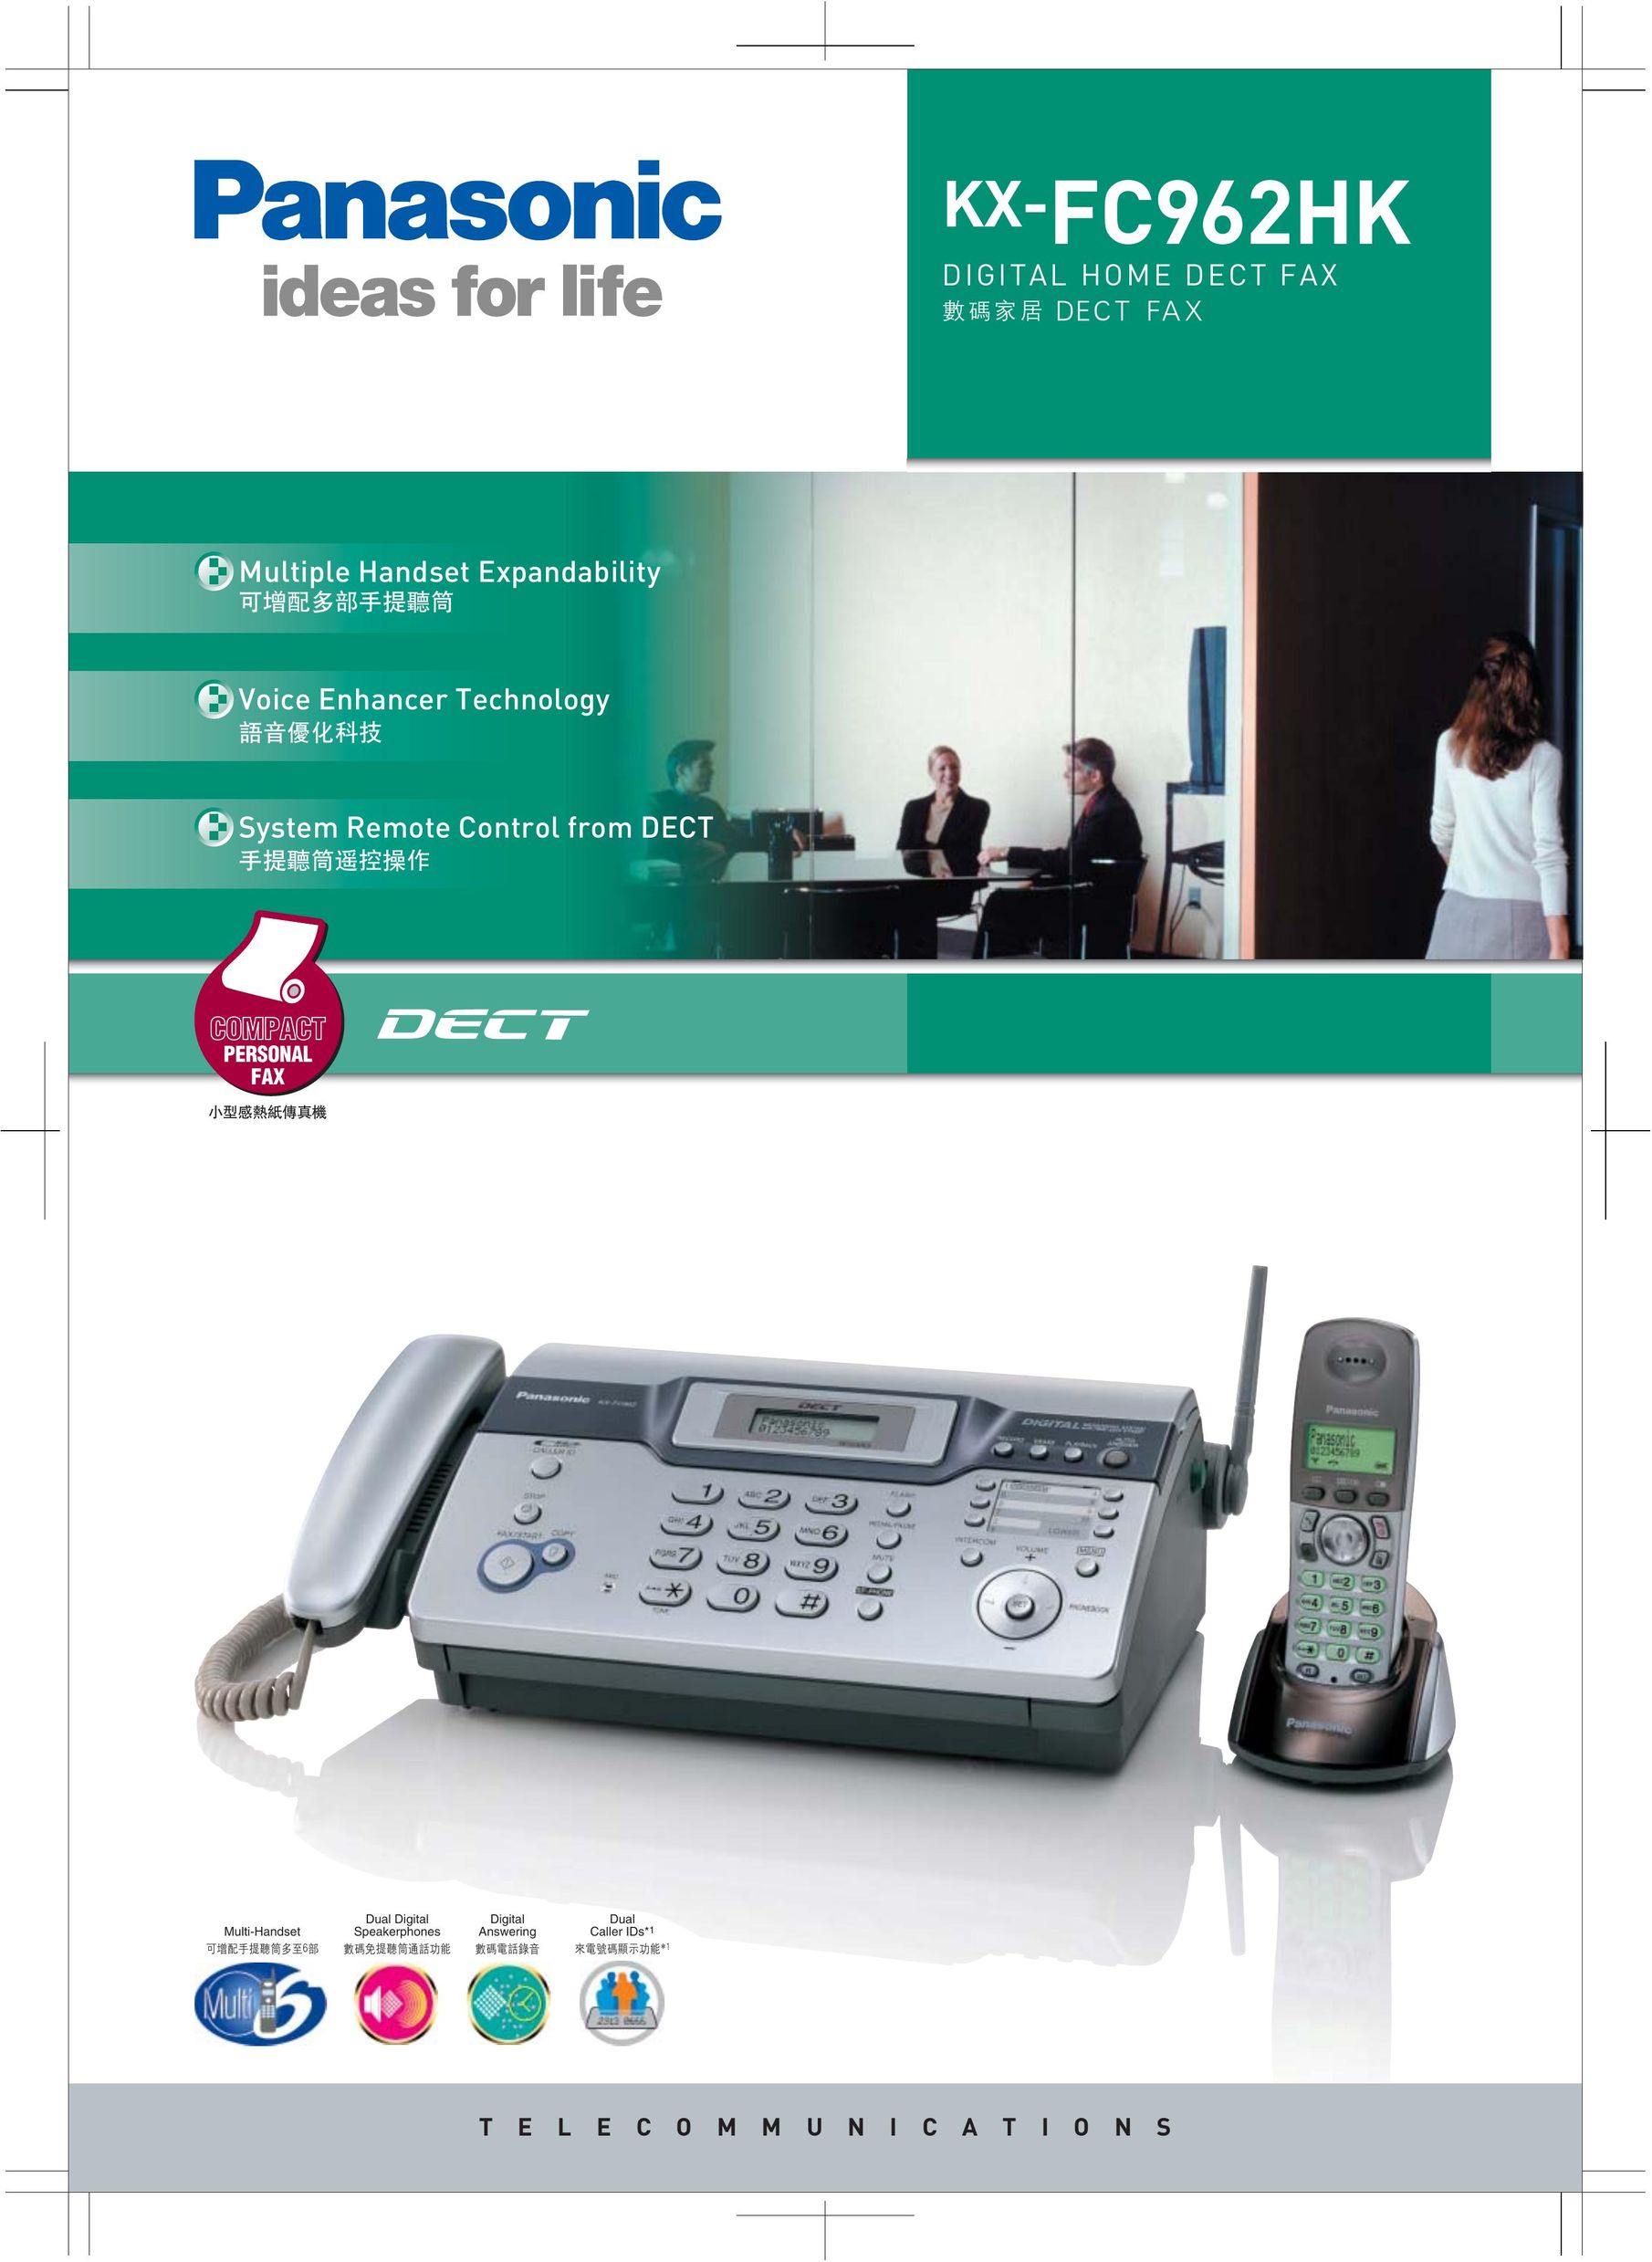 Panasonic KX-FC962HK Fax Machine User Manual